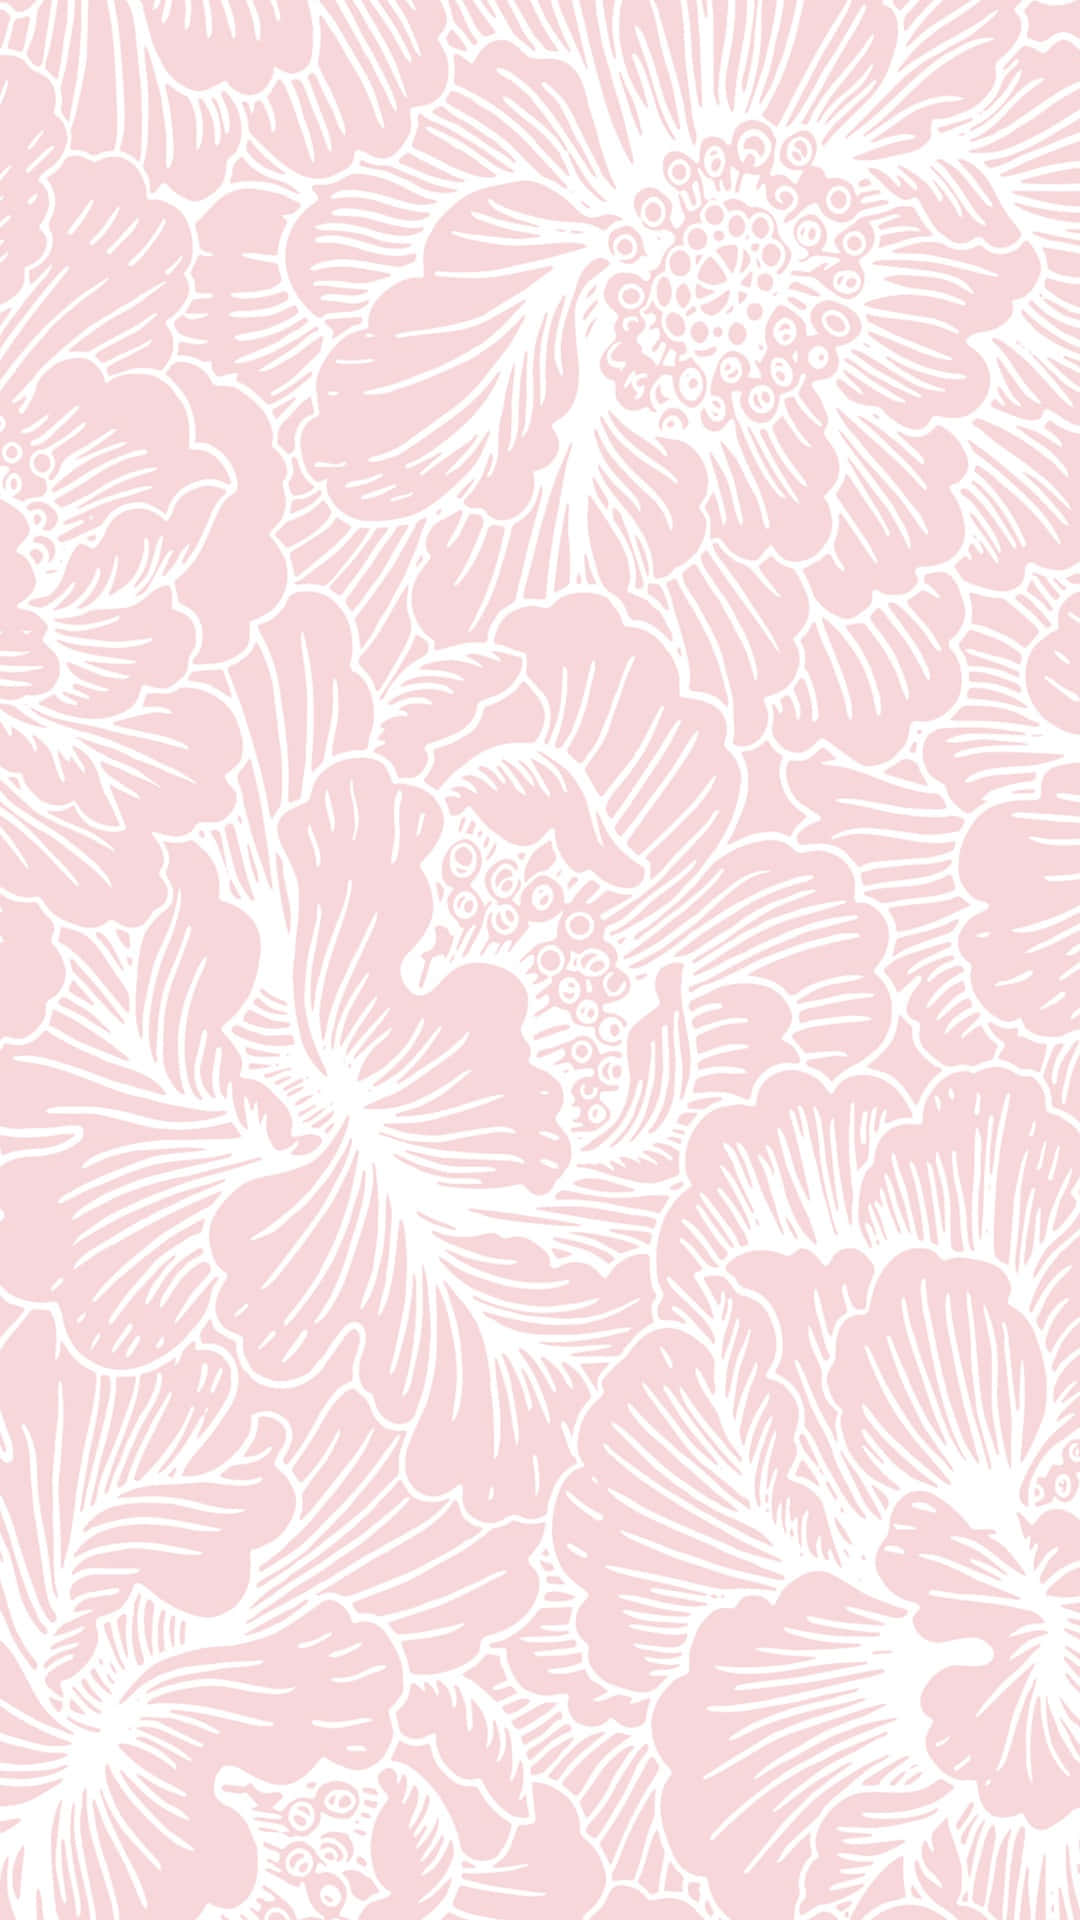 Elegant Pink Gradient iPhone Background